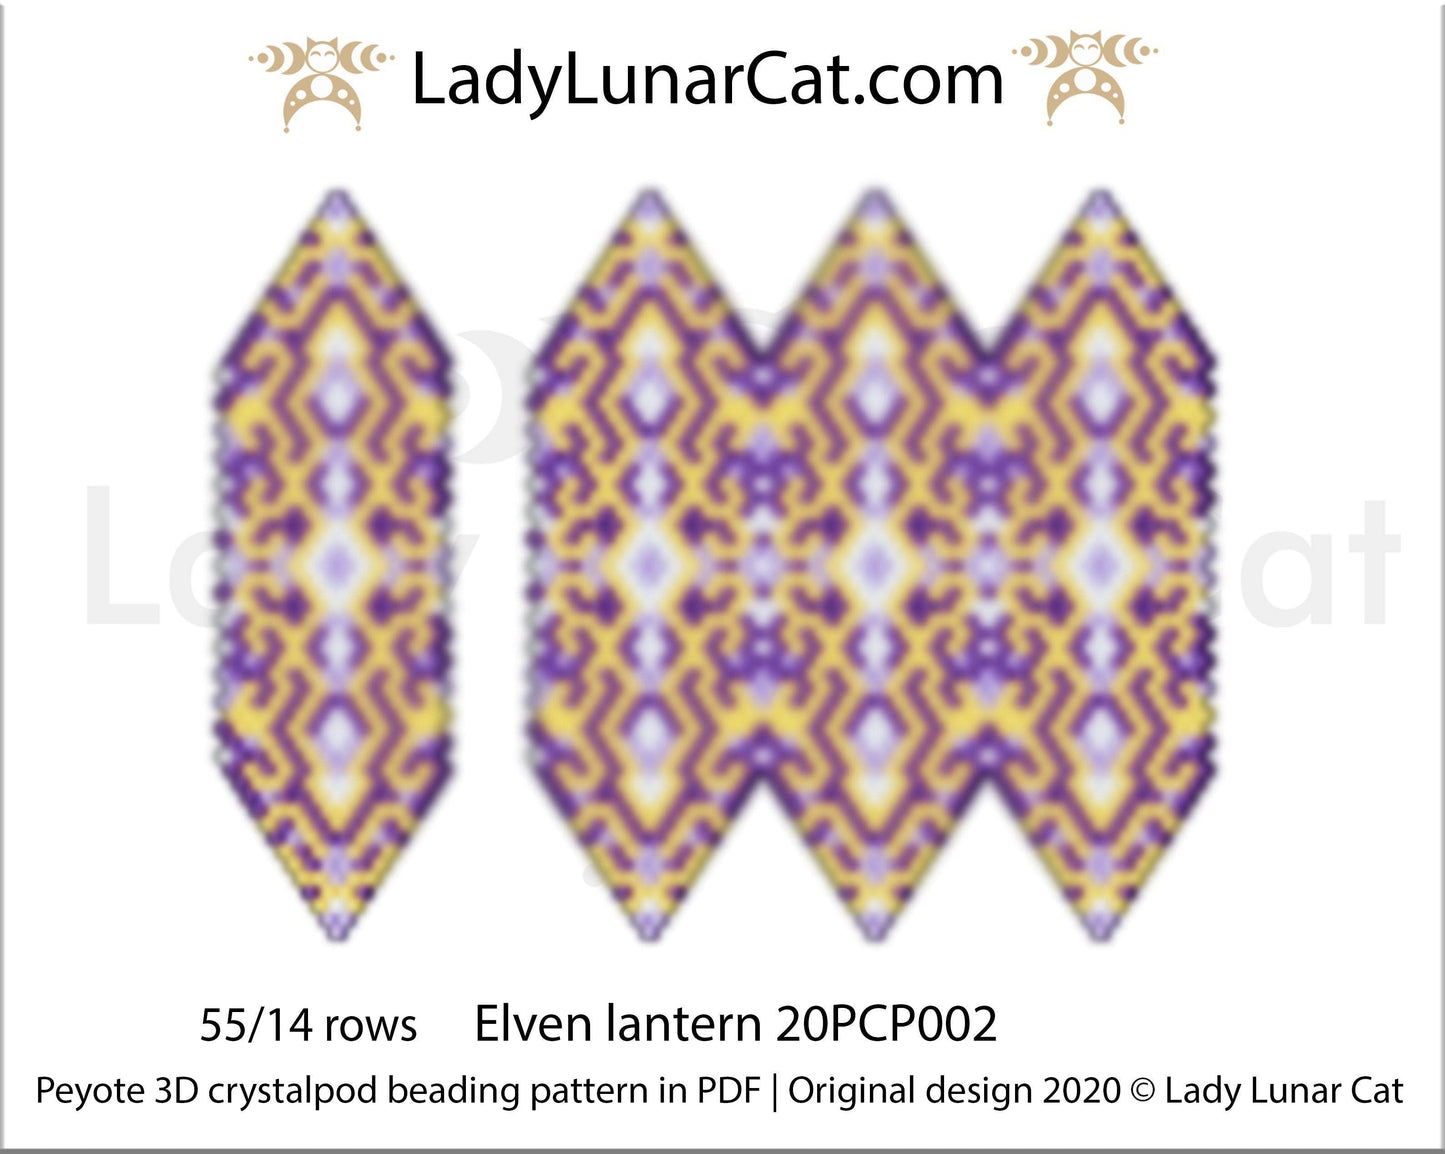 3d peyote pod pattern or crystalpod pattern for beading Elven lantern 20PCP002 LadyLunarCat